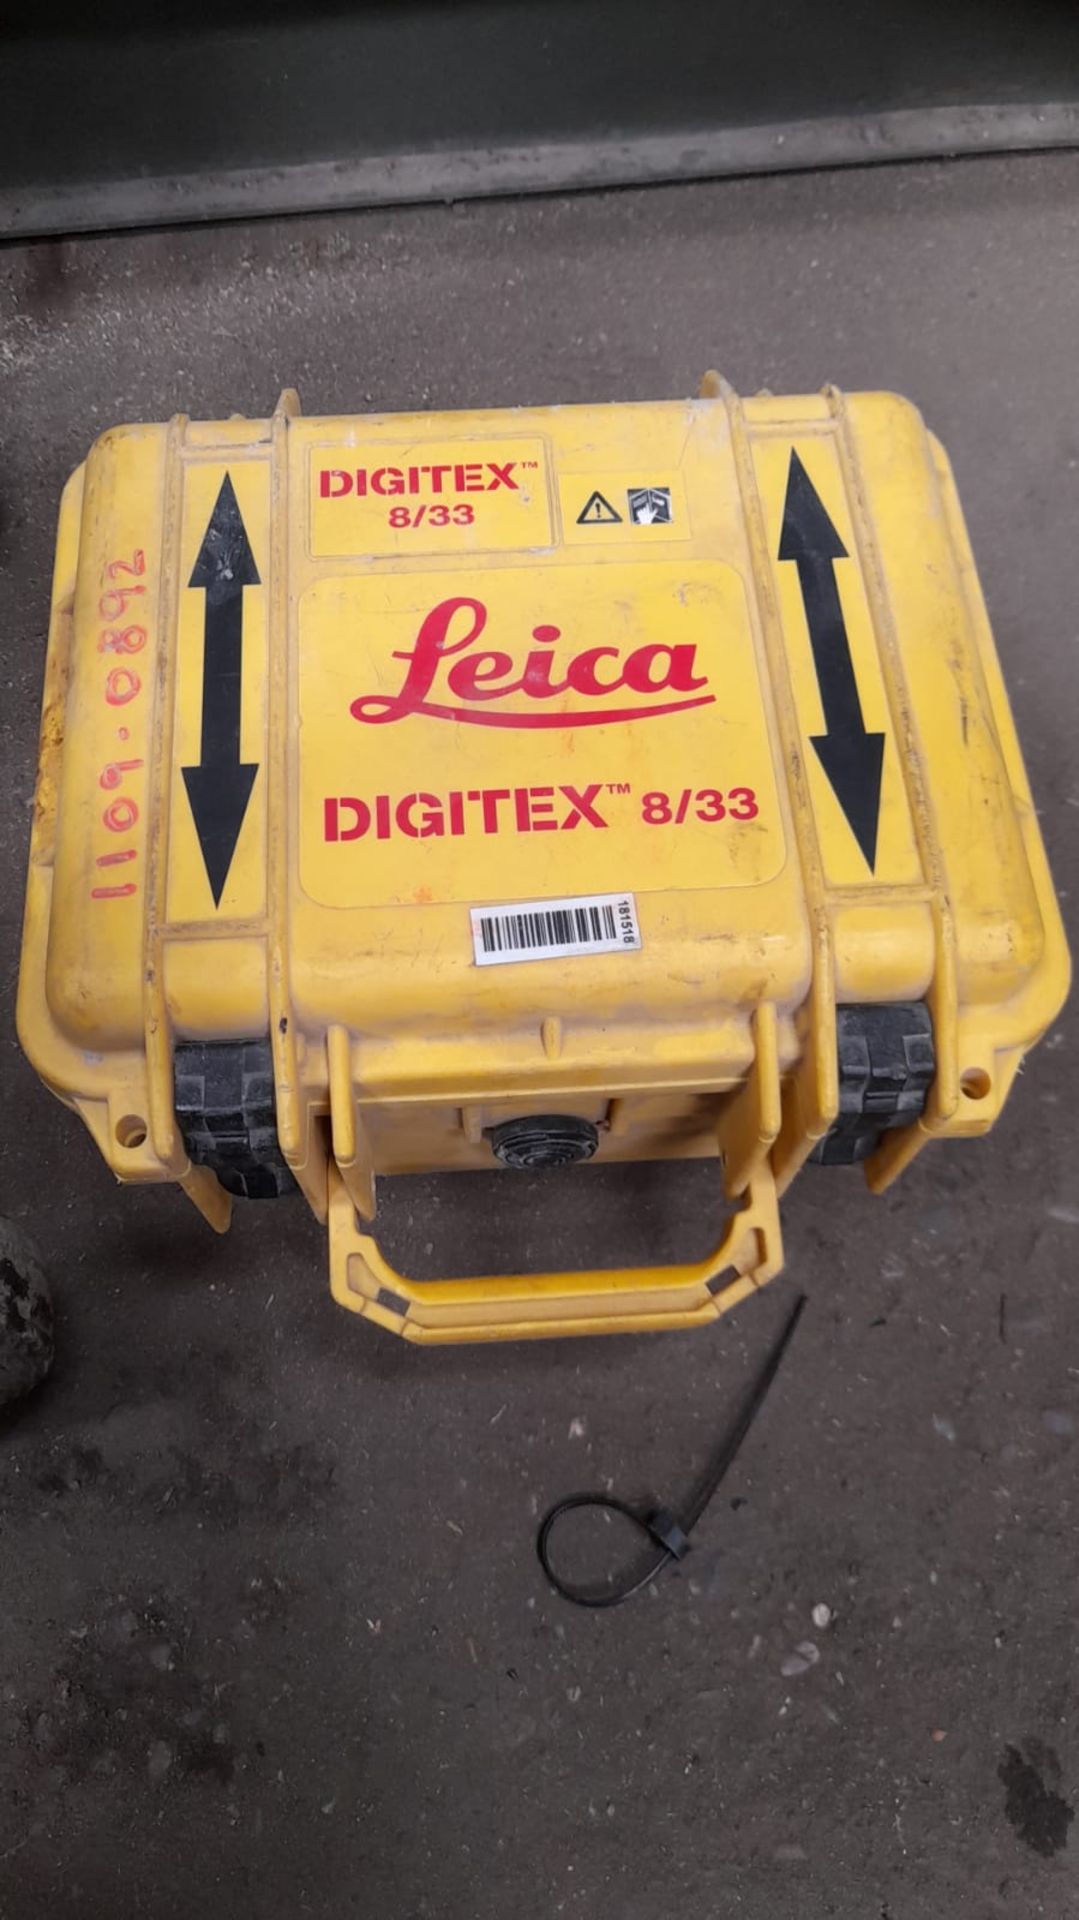 LEICA DIGITEX 8/33 SIGNAL GENERATOR, APPEARS TO BE WORKING *PLUS VAT*